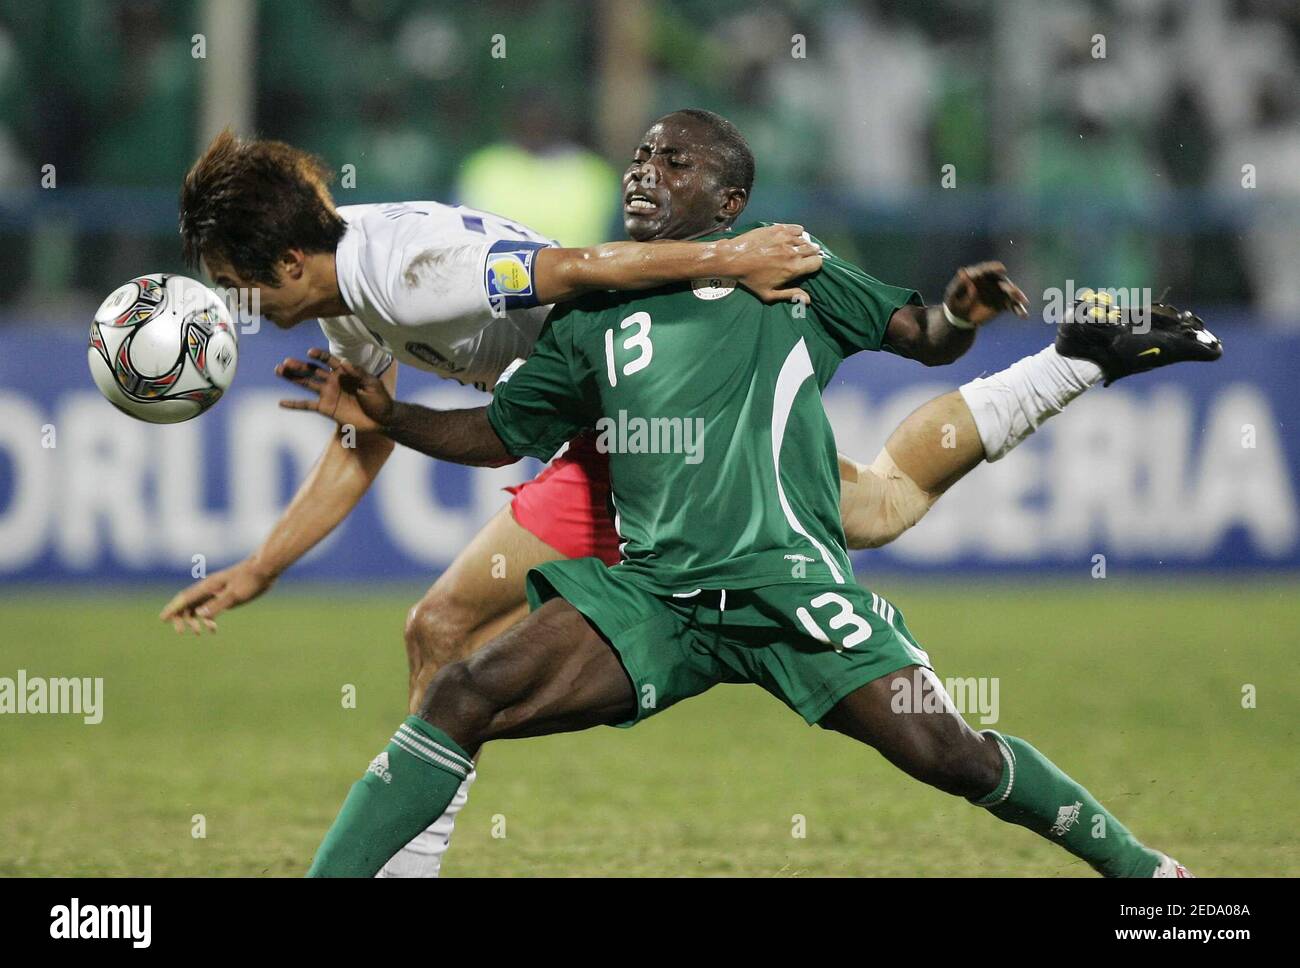 Football - Korea Republic v Nigeria FIFA Under 17 World Cup Quarter Final -  Nigeria 2009 - UJ Esuene Stadium, Calabar, Nigeria - 9/11/09 Korea's Jin Su  Kim (L) and Nigeria's Omoh